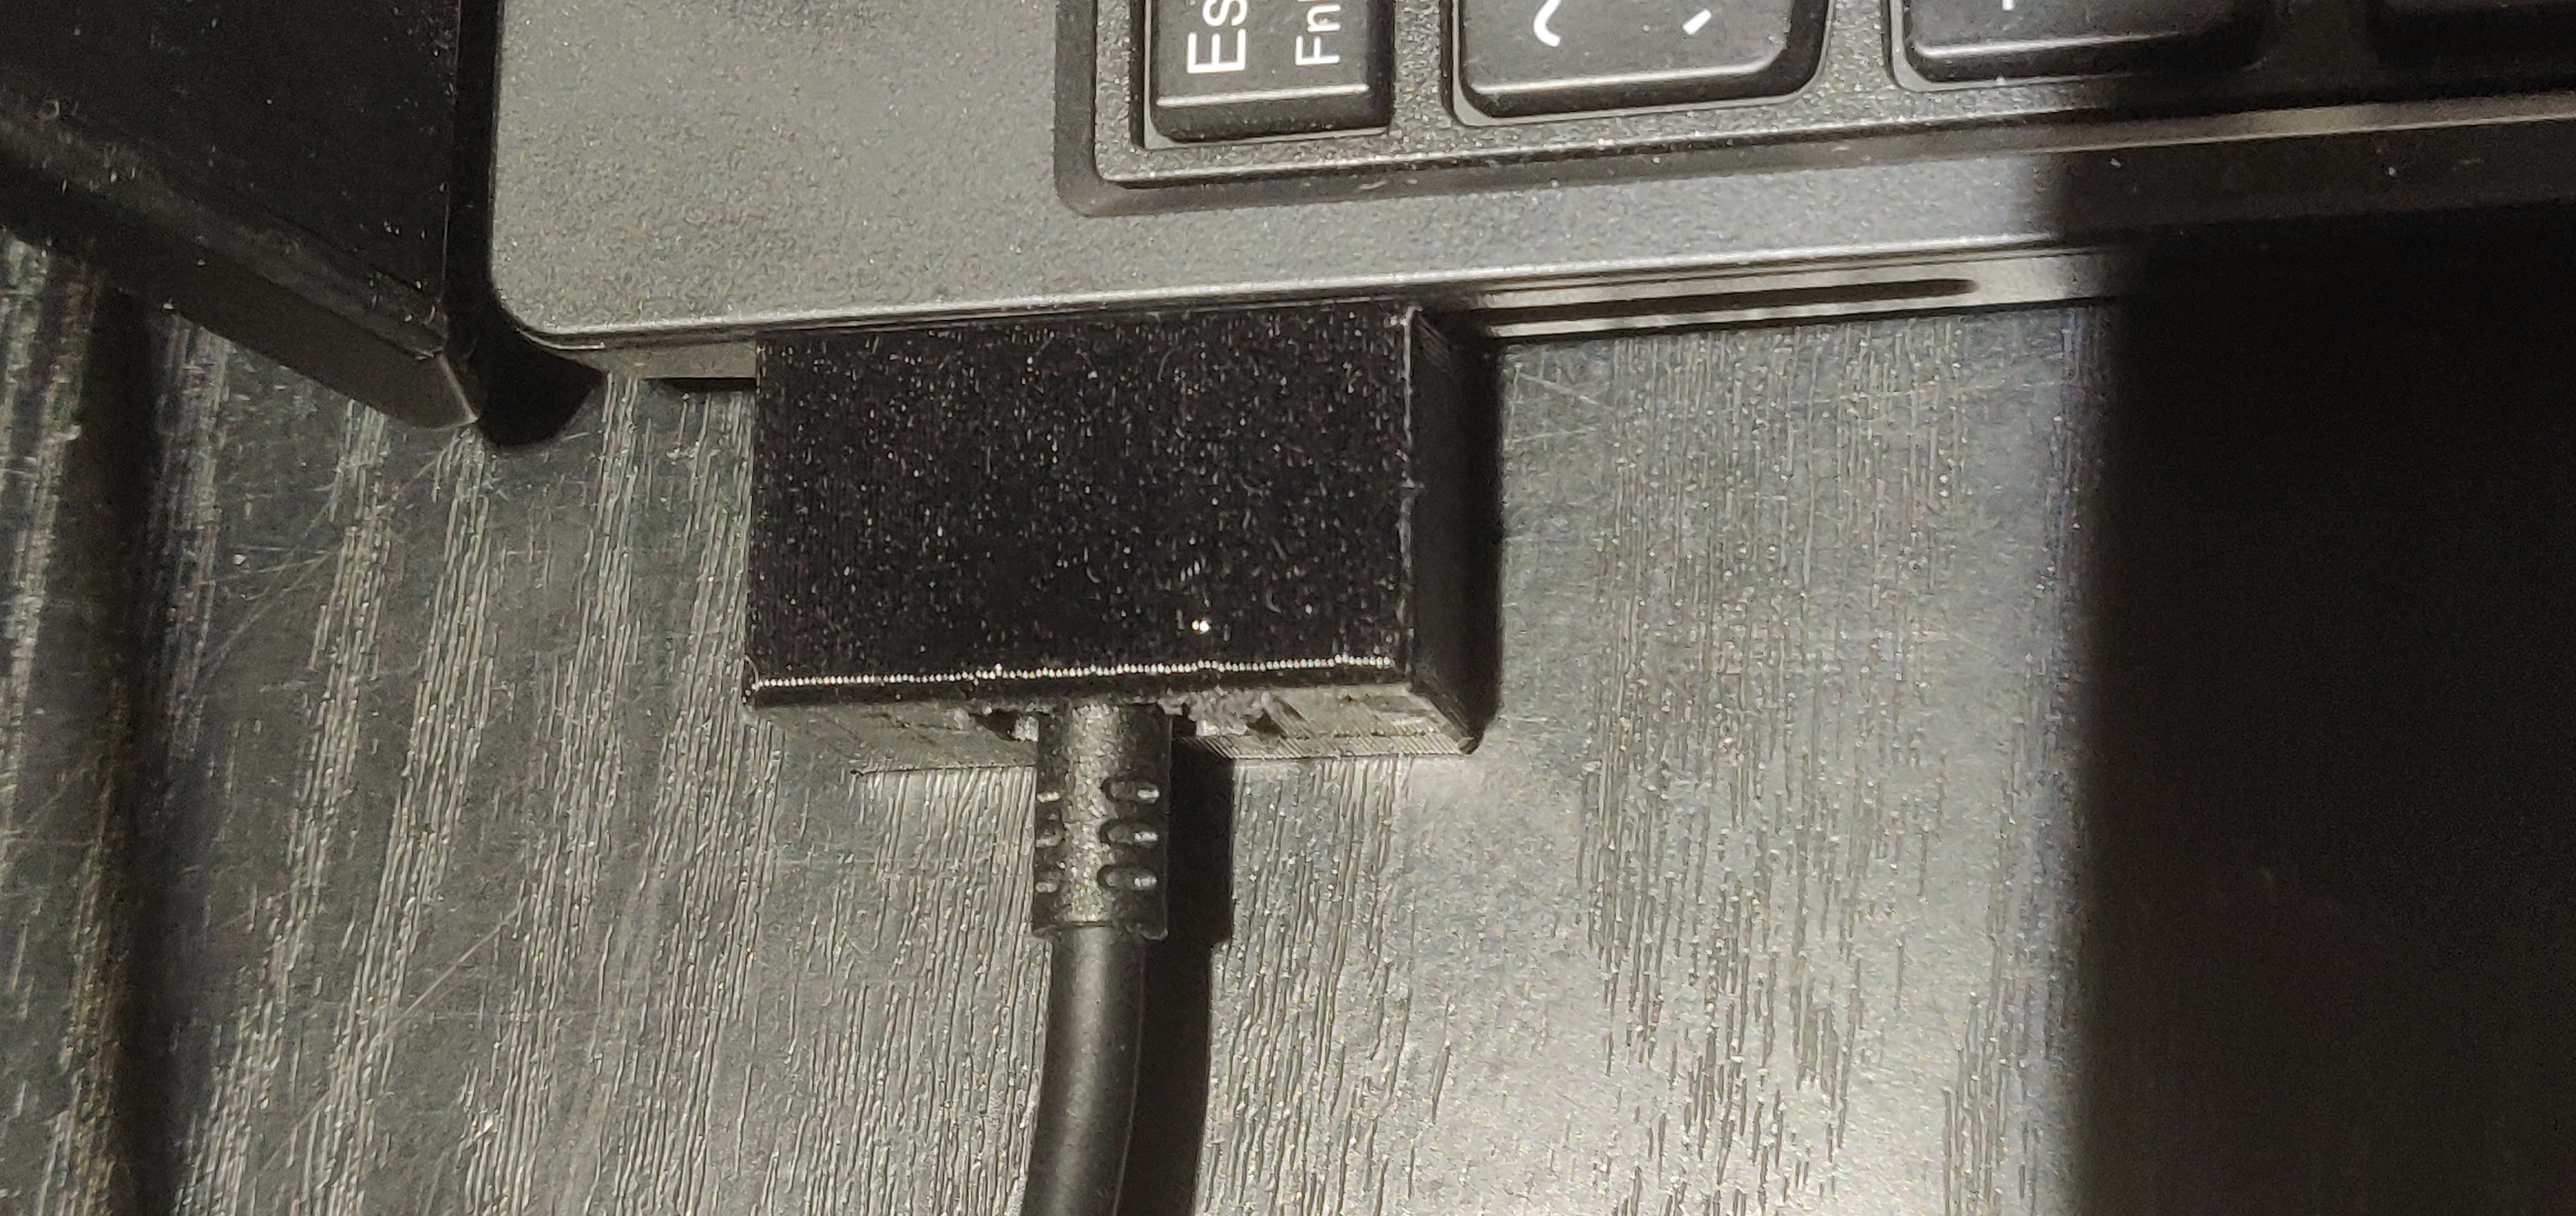 Thinkpad USB C Strain relief